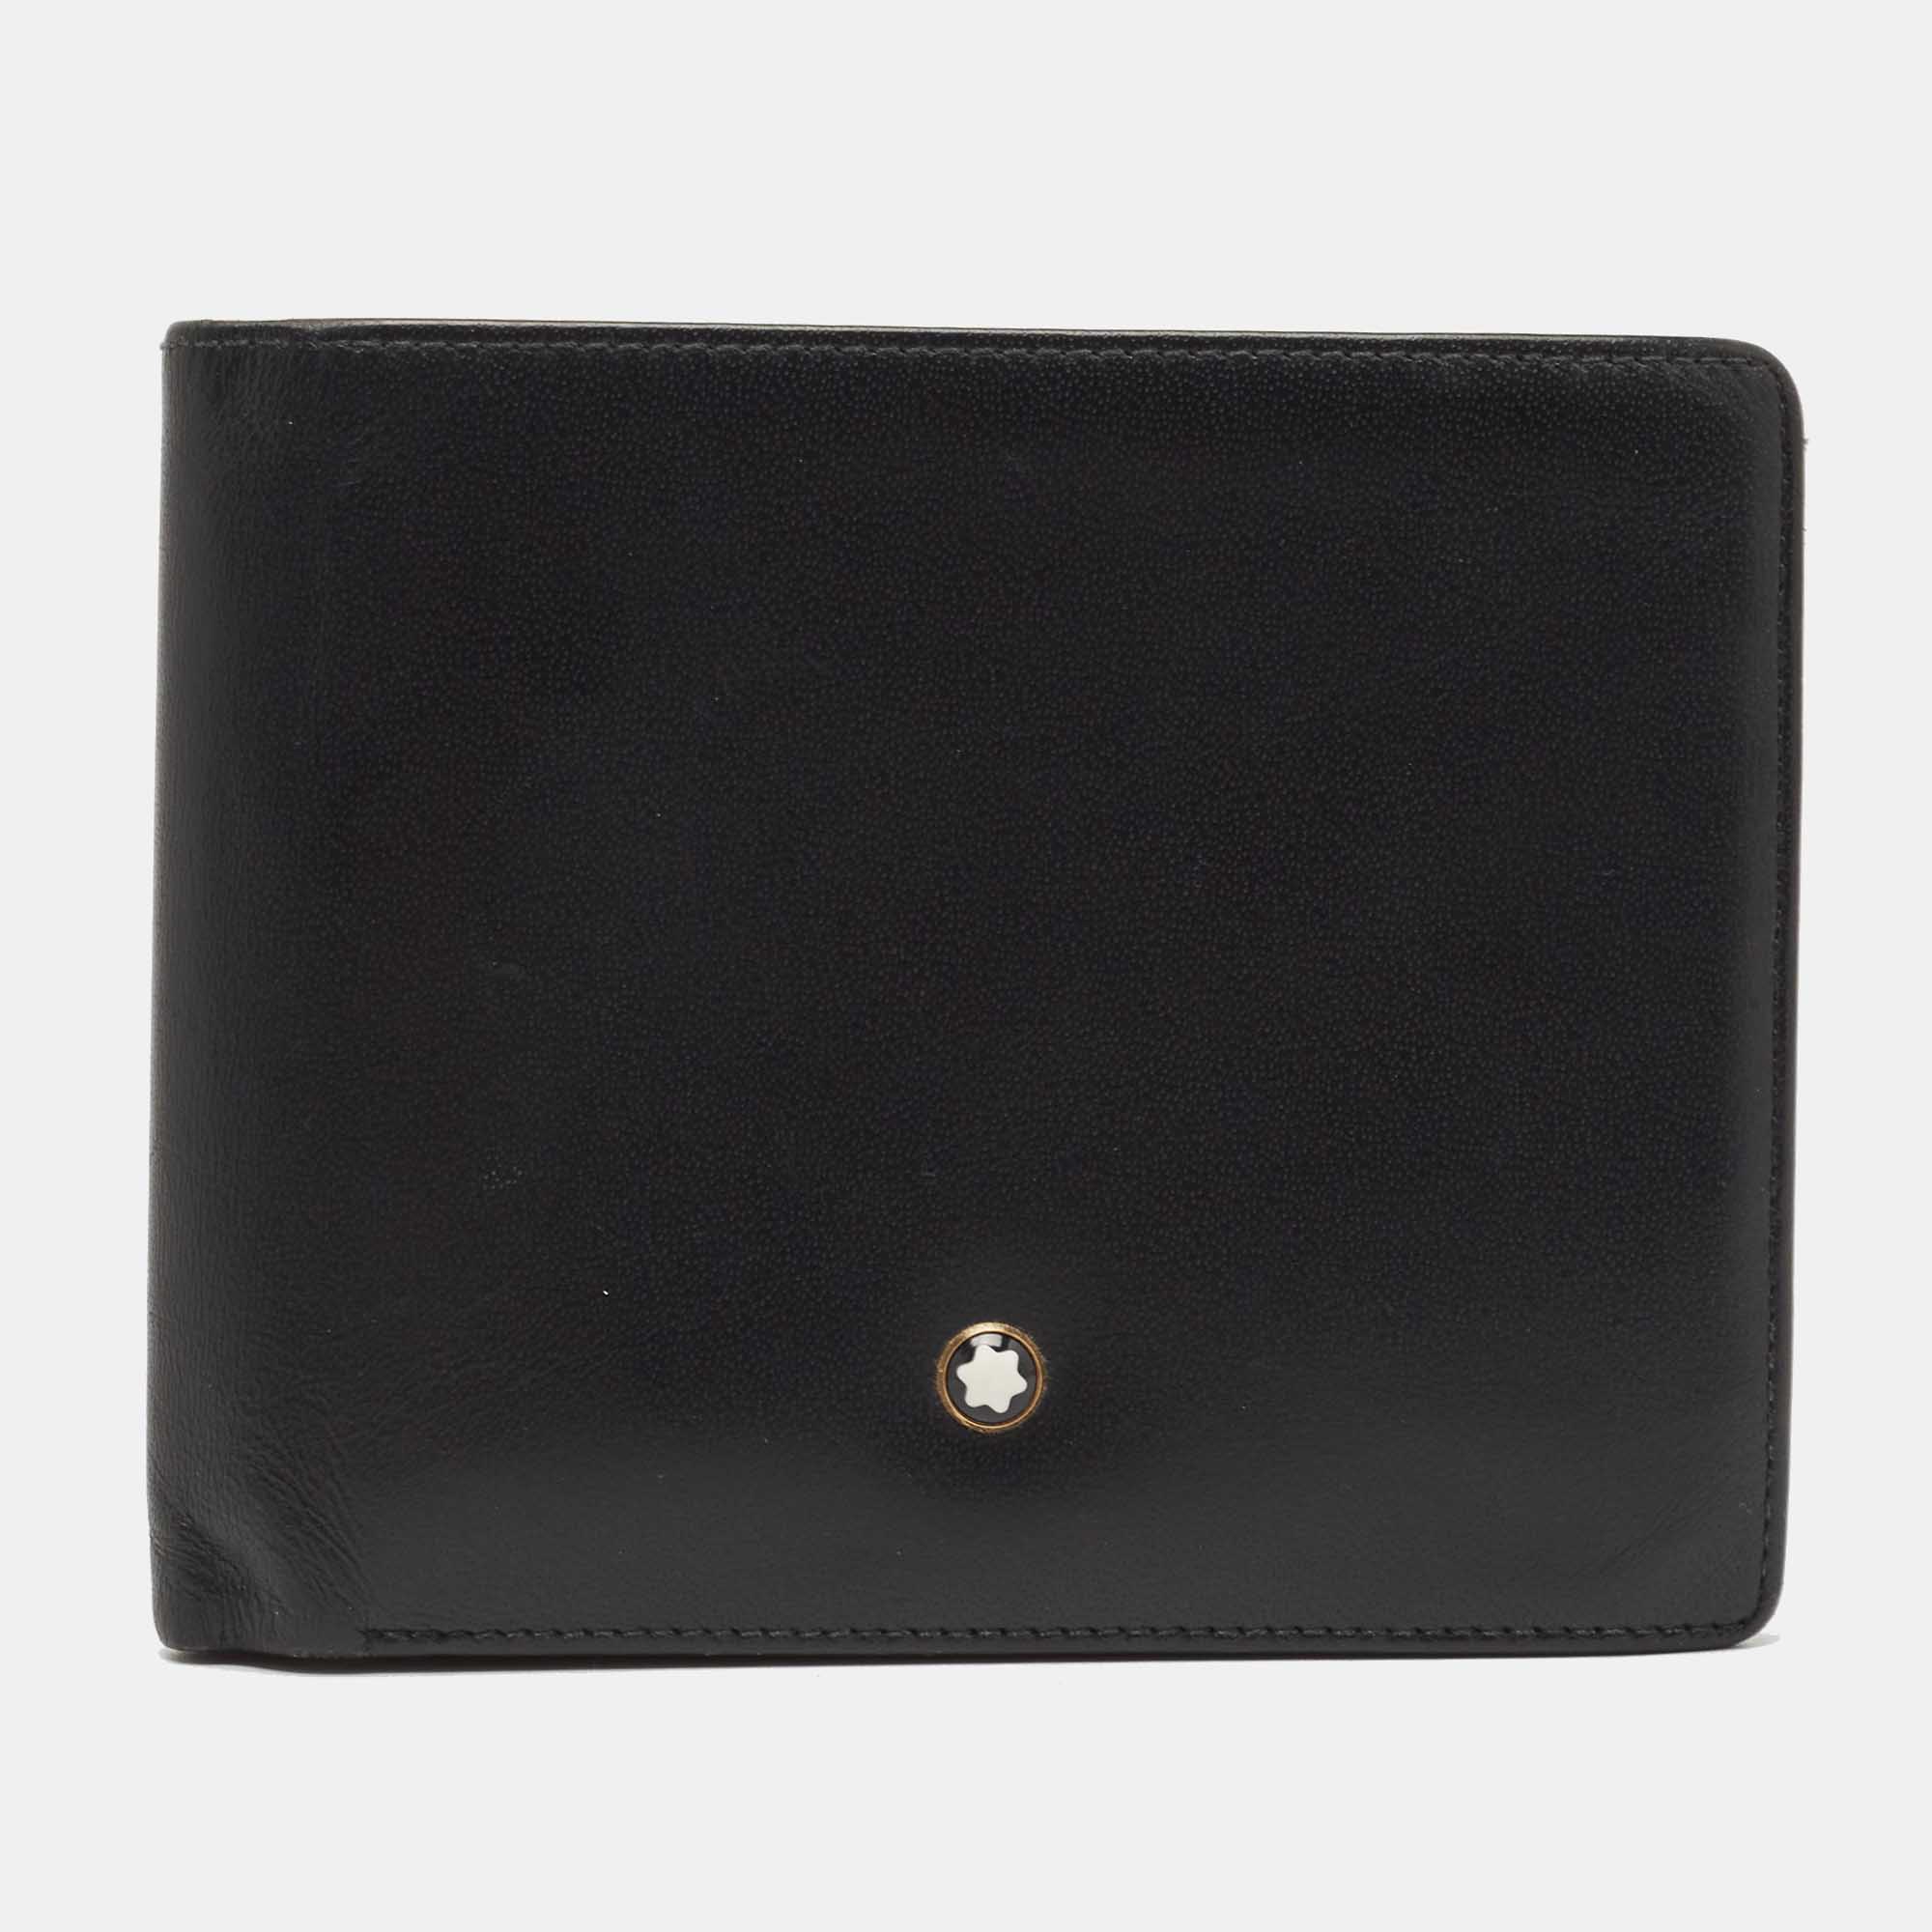 Montblanc black leather miesterstuck bifold wallet